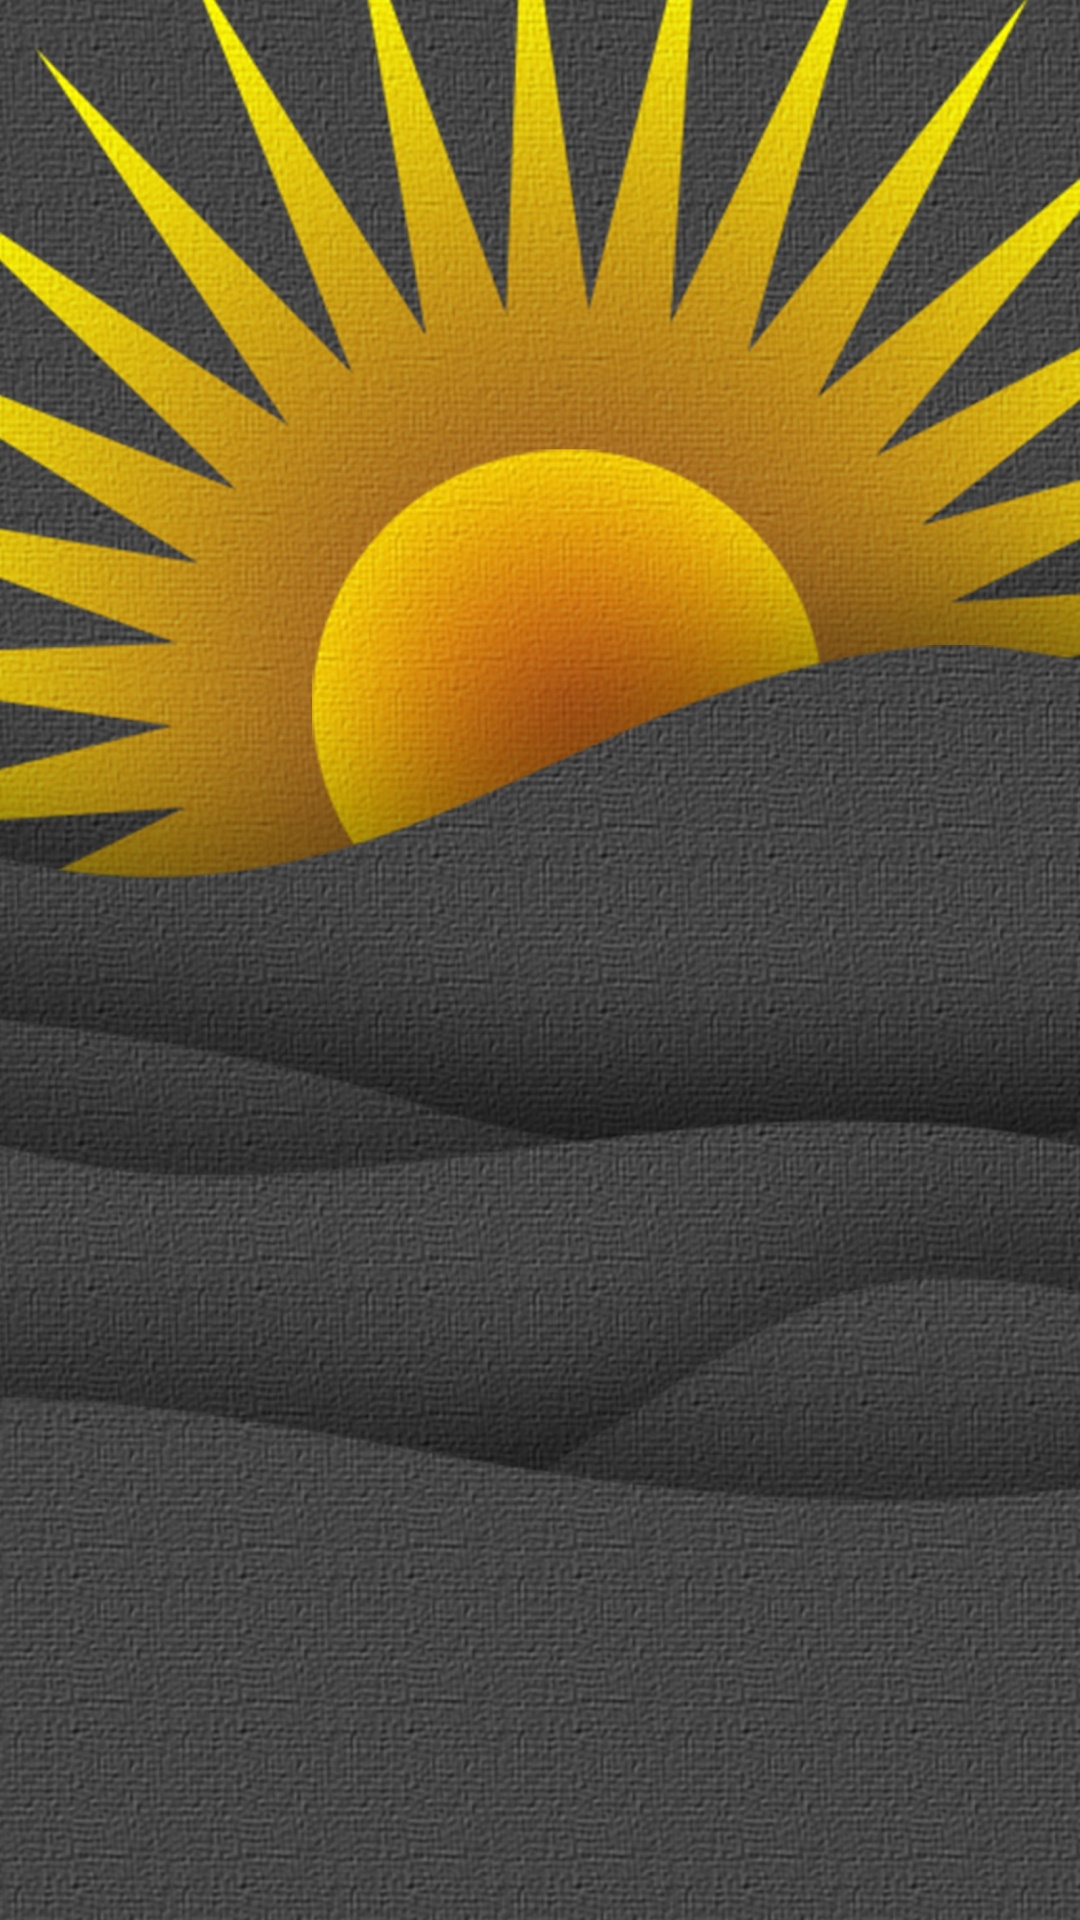 Soleil Sur Textile Noir Illustration. Wallpaper in 1080x1920 Resolution